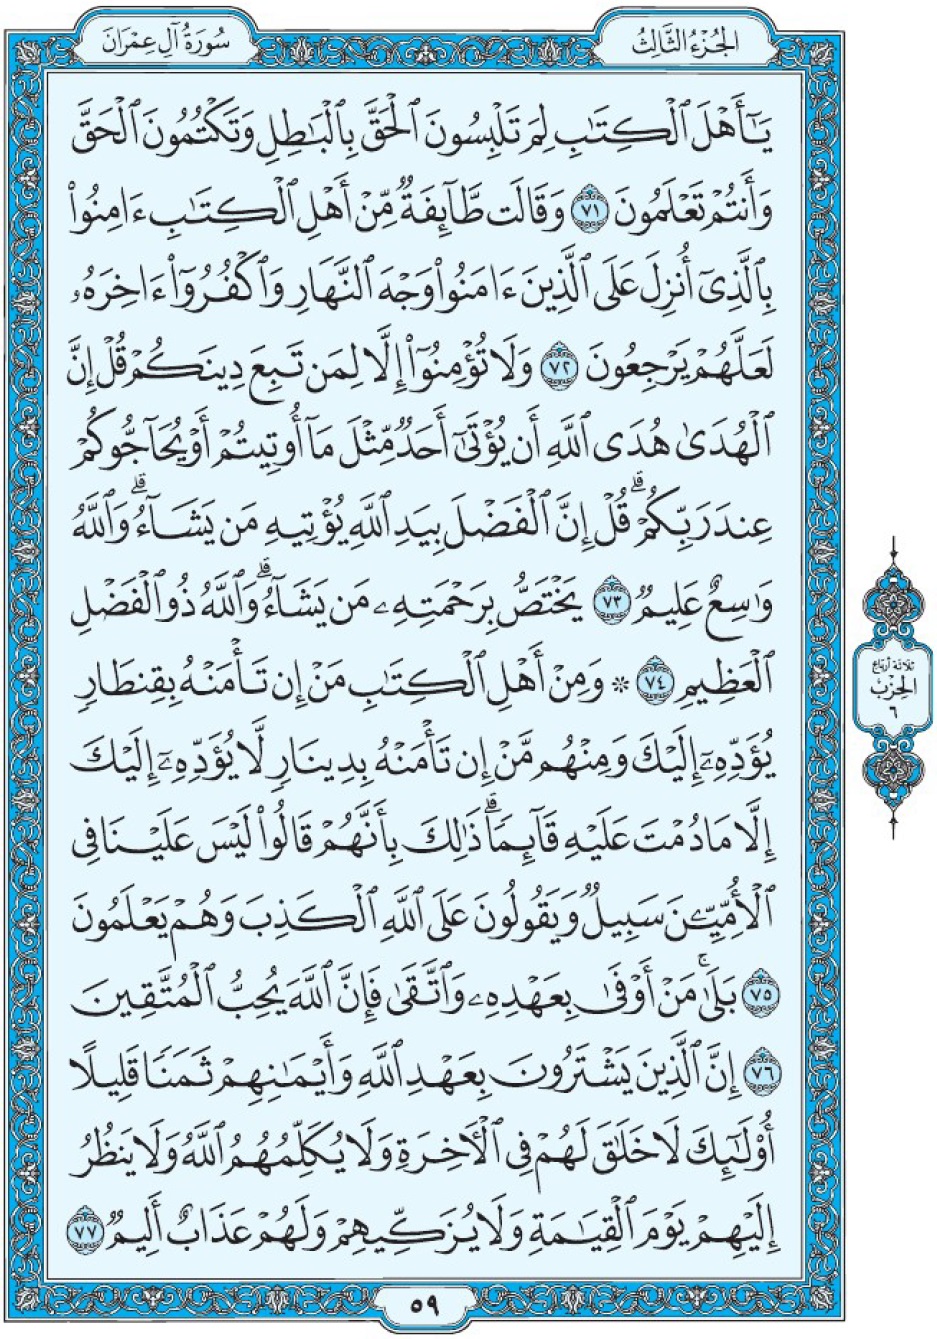 Коран Мединский мусхаф страница 59, Али Имран, аят 71-77